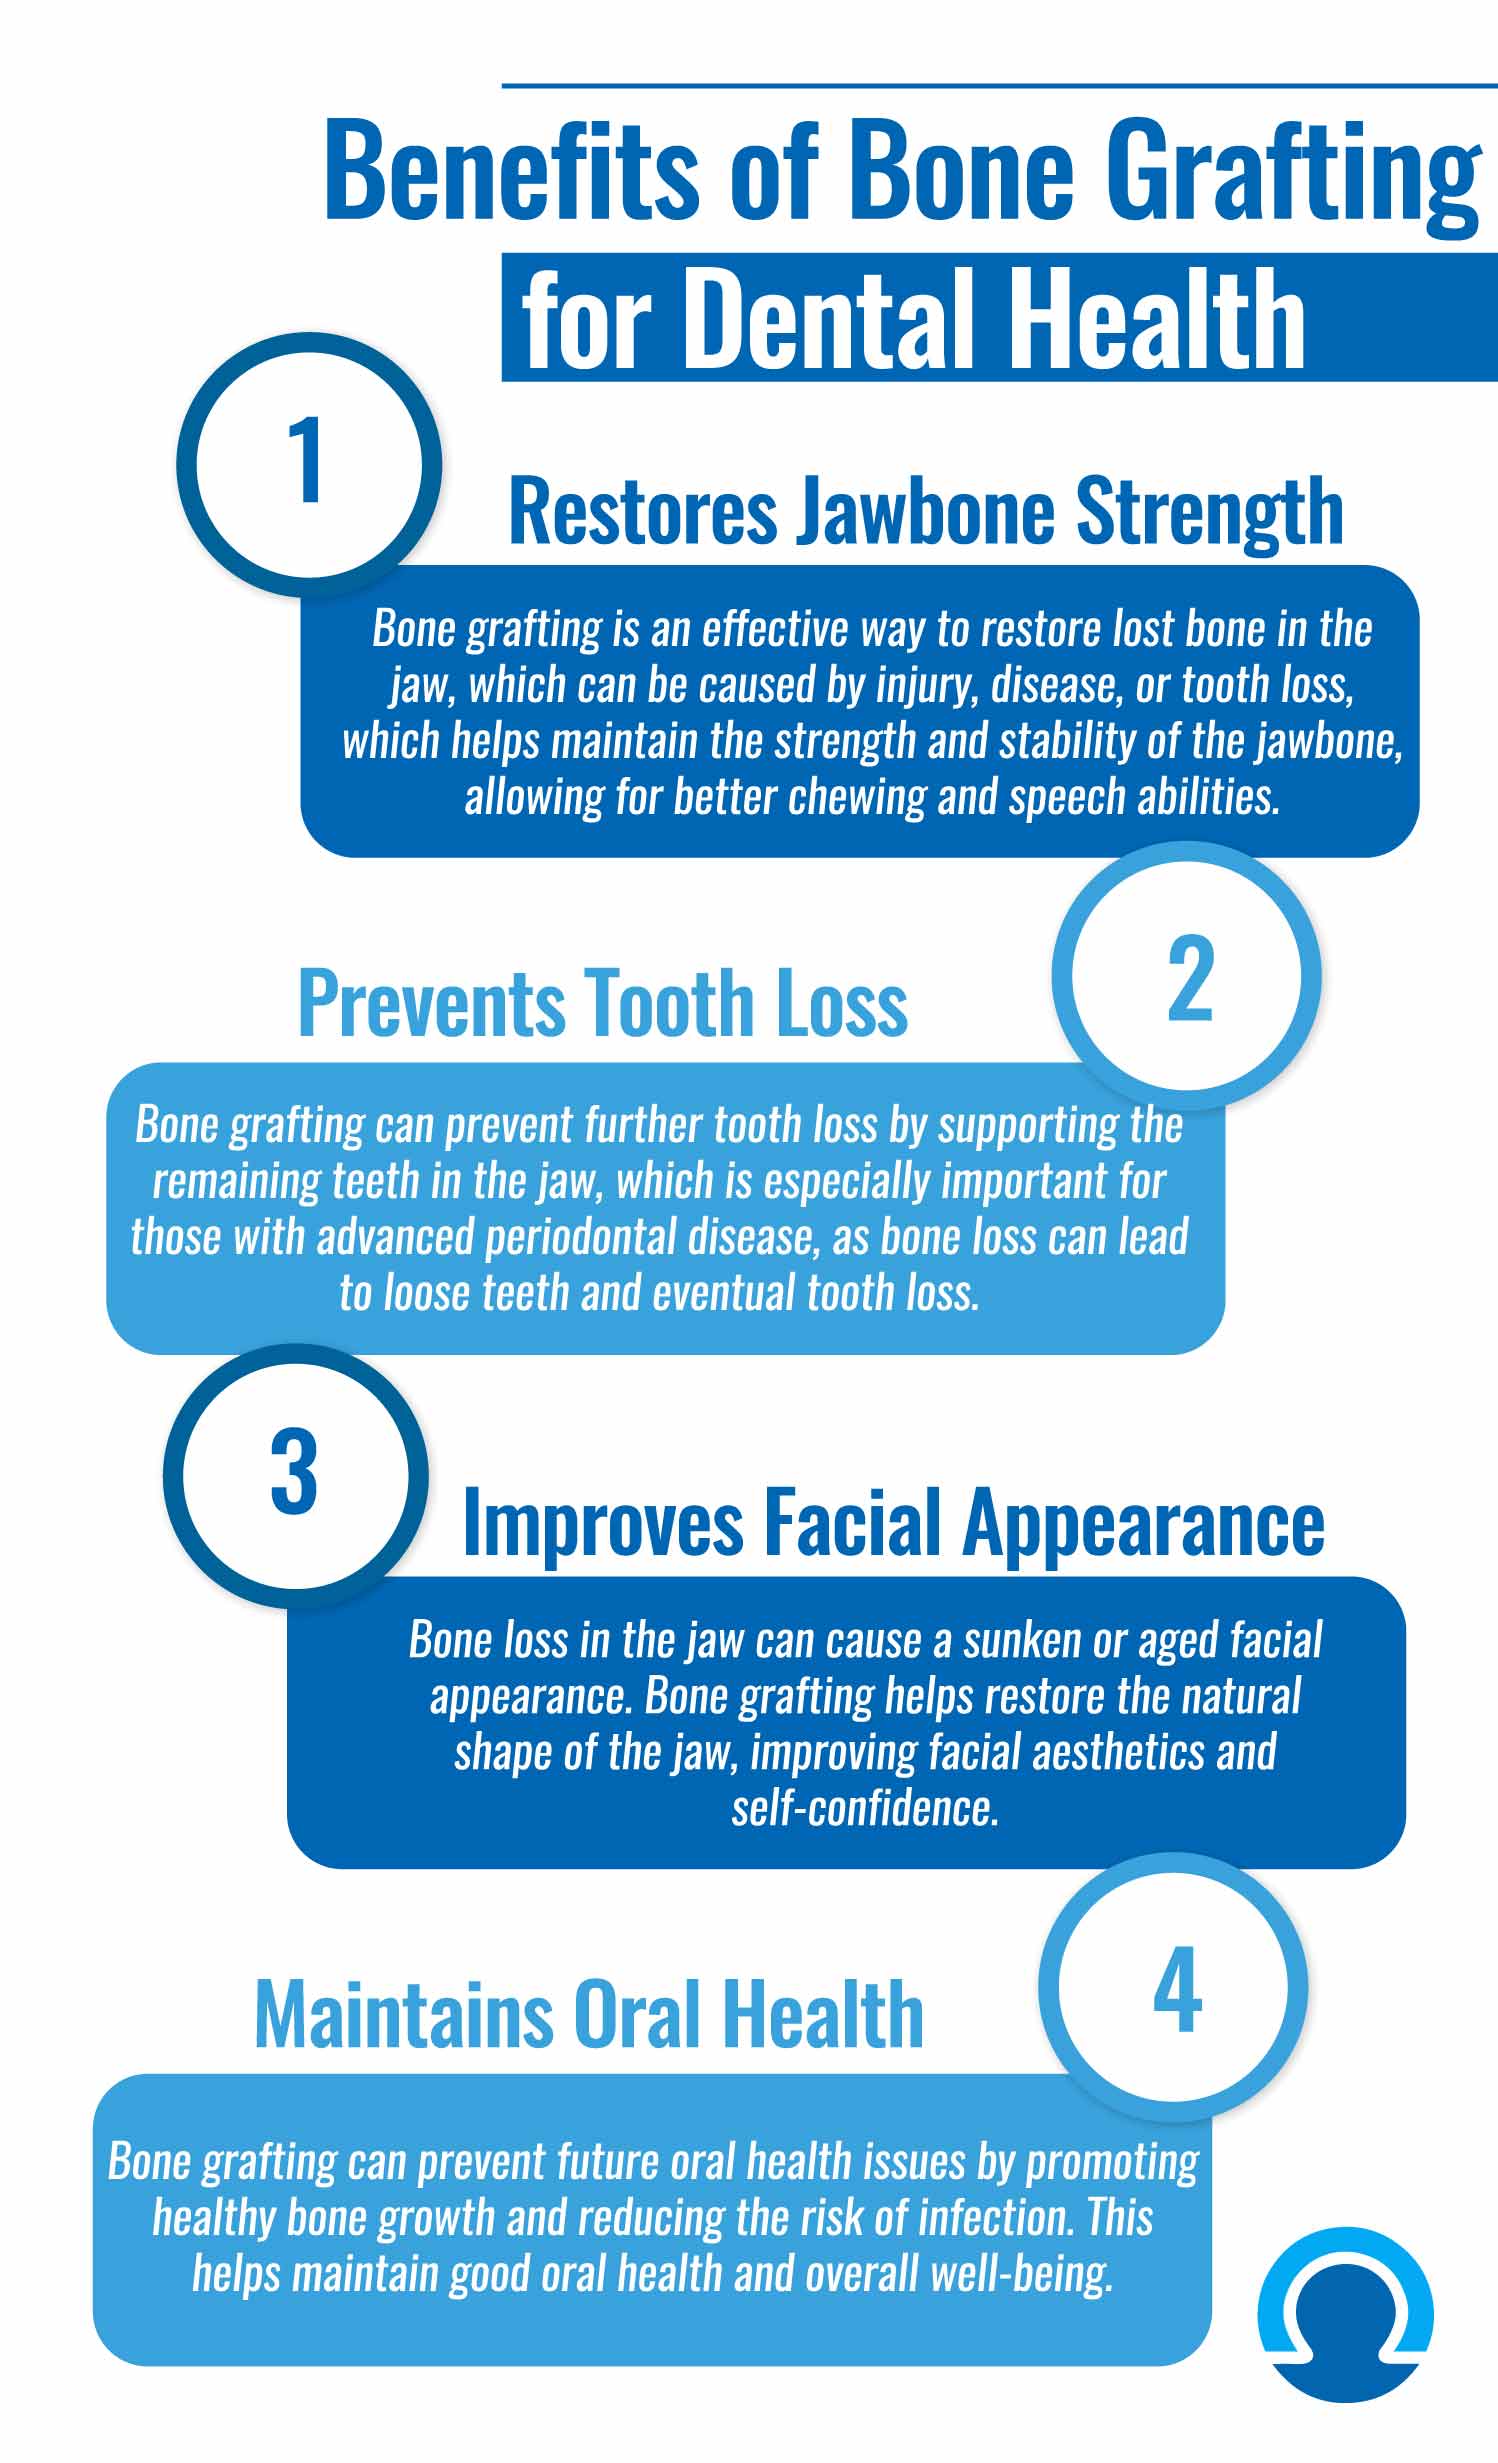 Benefits of Bone Grafting for Dental Health